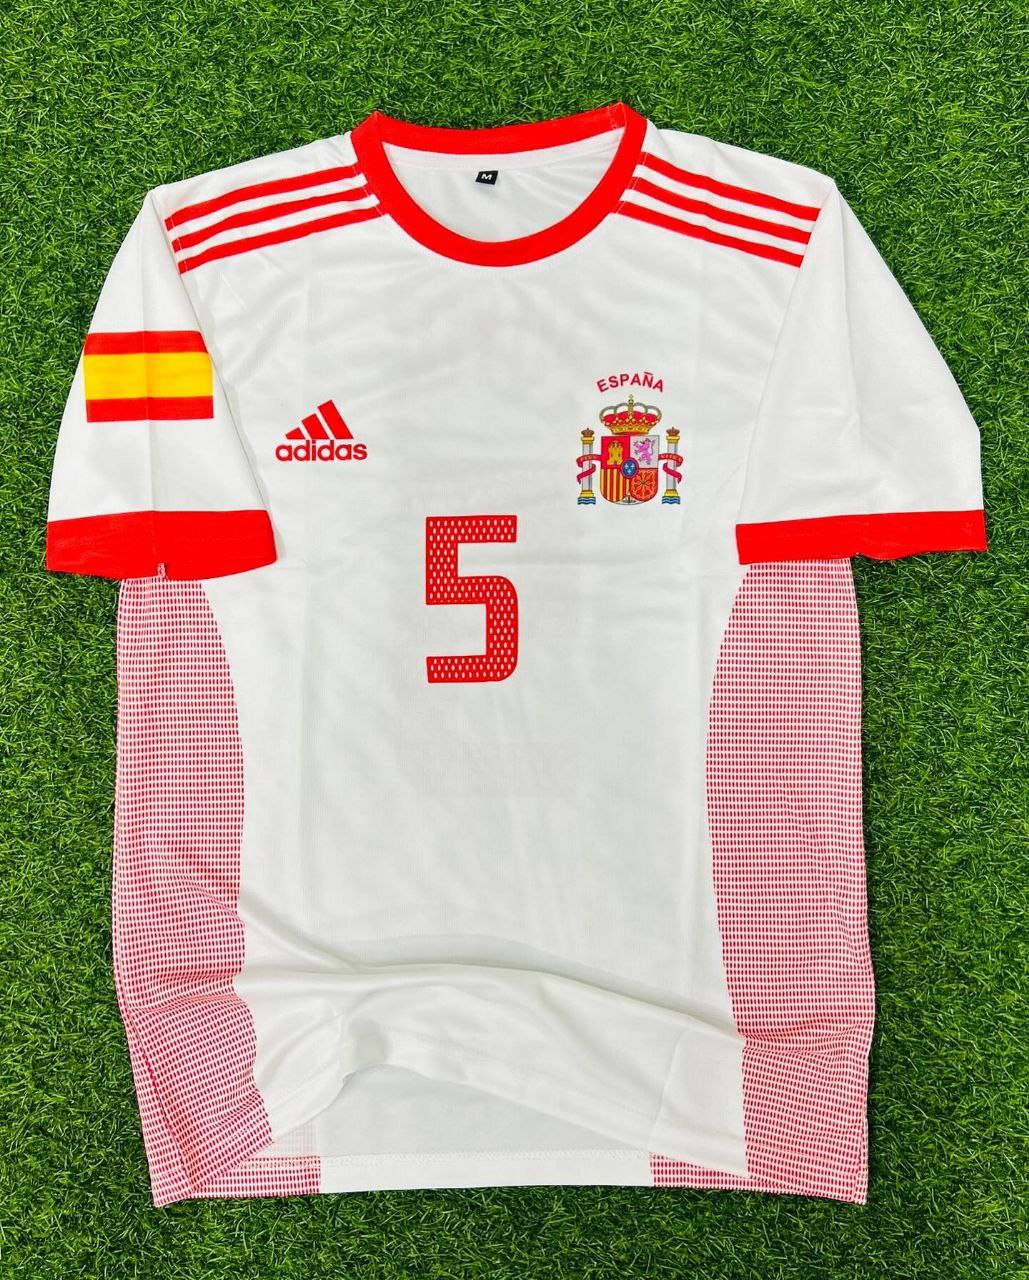 Carles Puyol 02-03 Spain White Retro Jersey